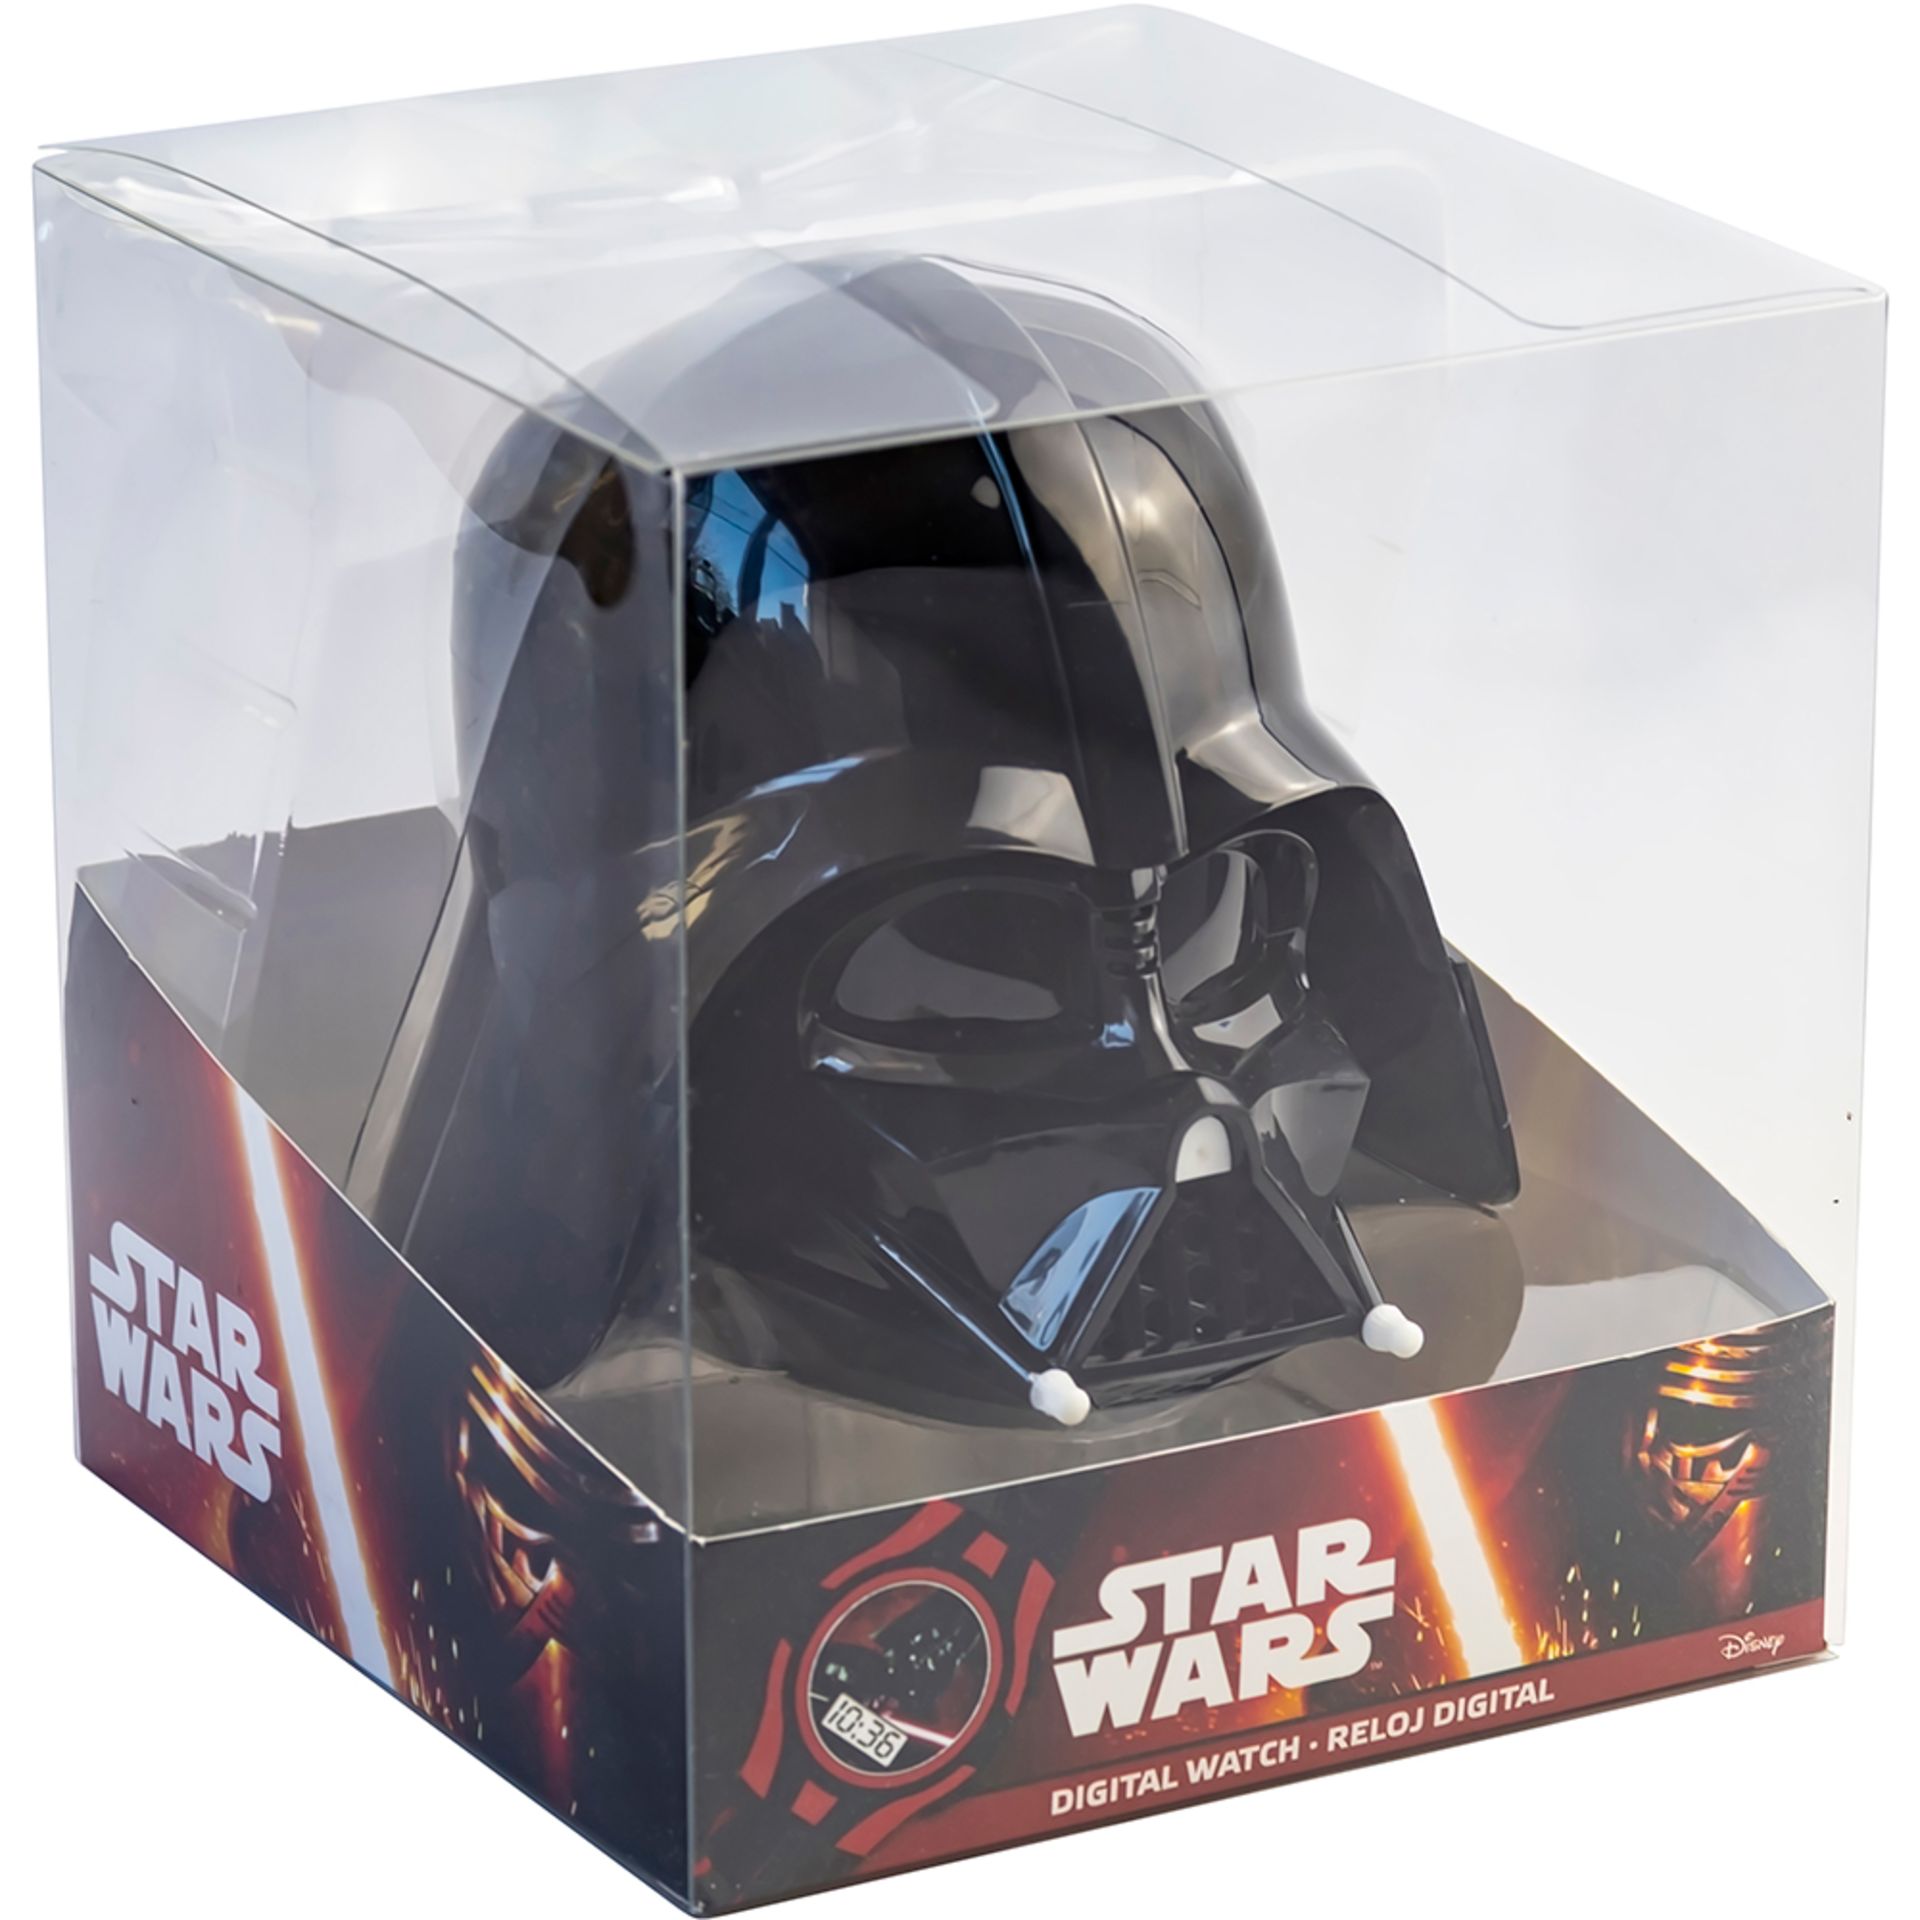 V Brand New Star Wars Darth Vader Watch In 3D Case eBay Price £42.63